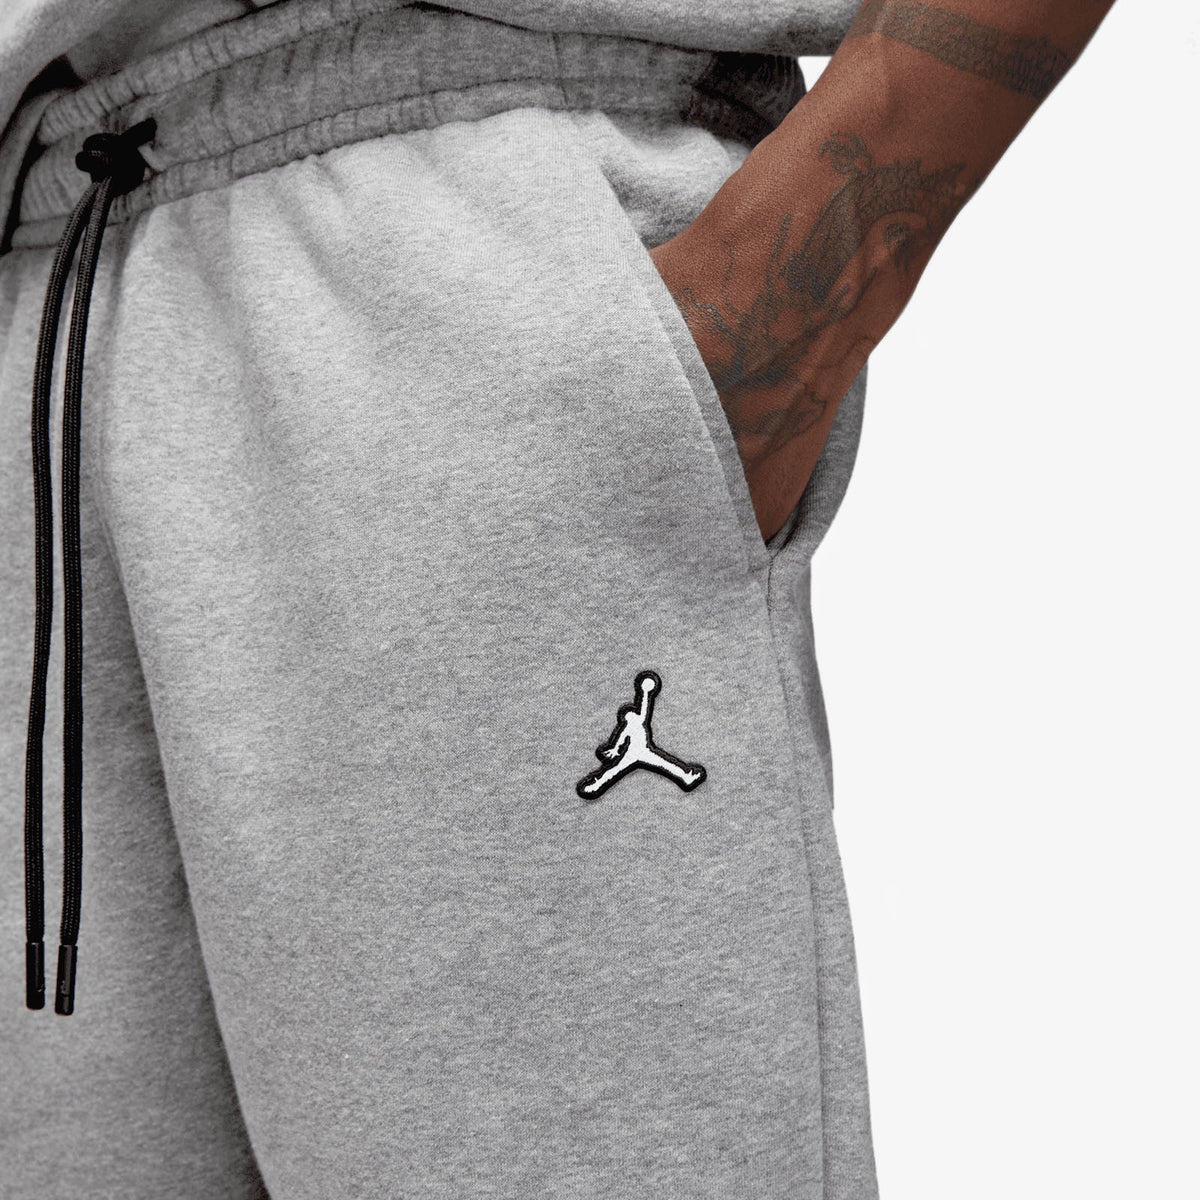 Jordan Essentials Brooklyn Fleece Pants - Grey